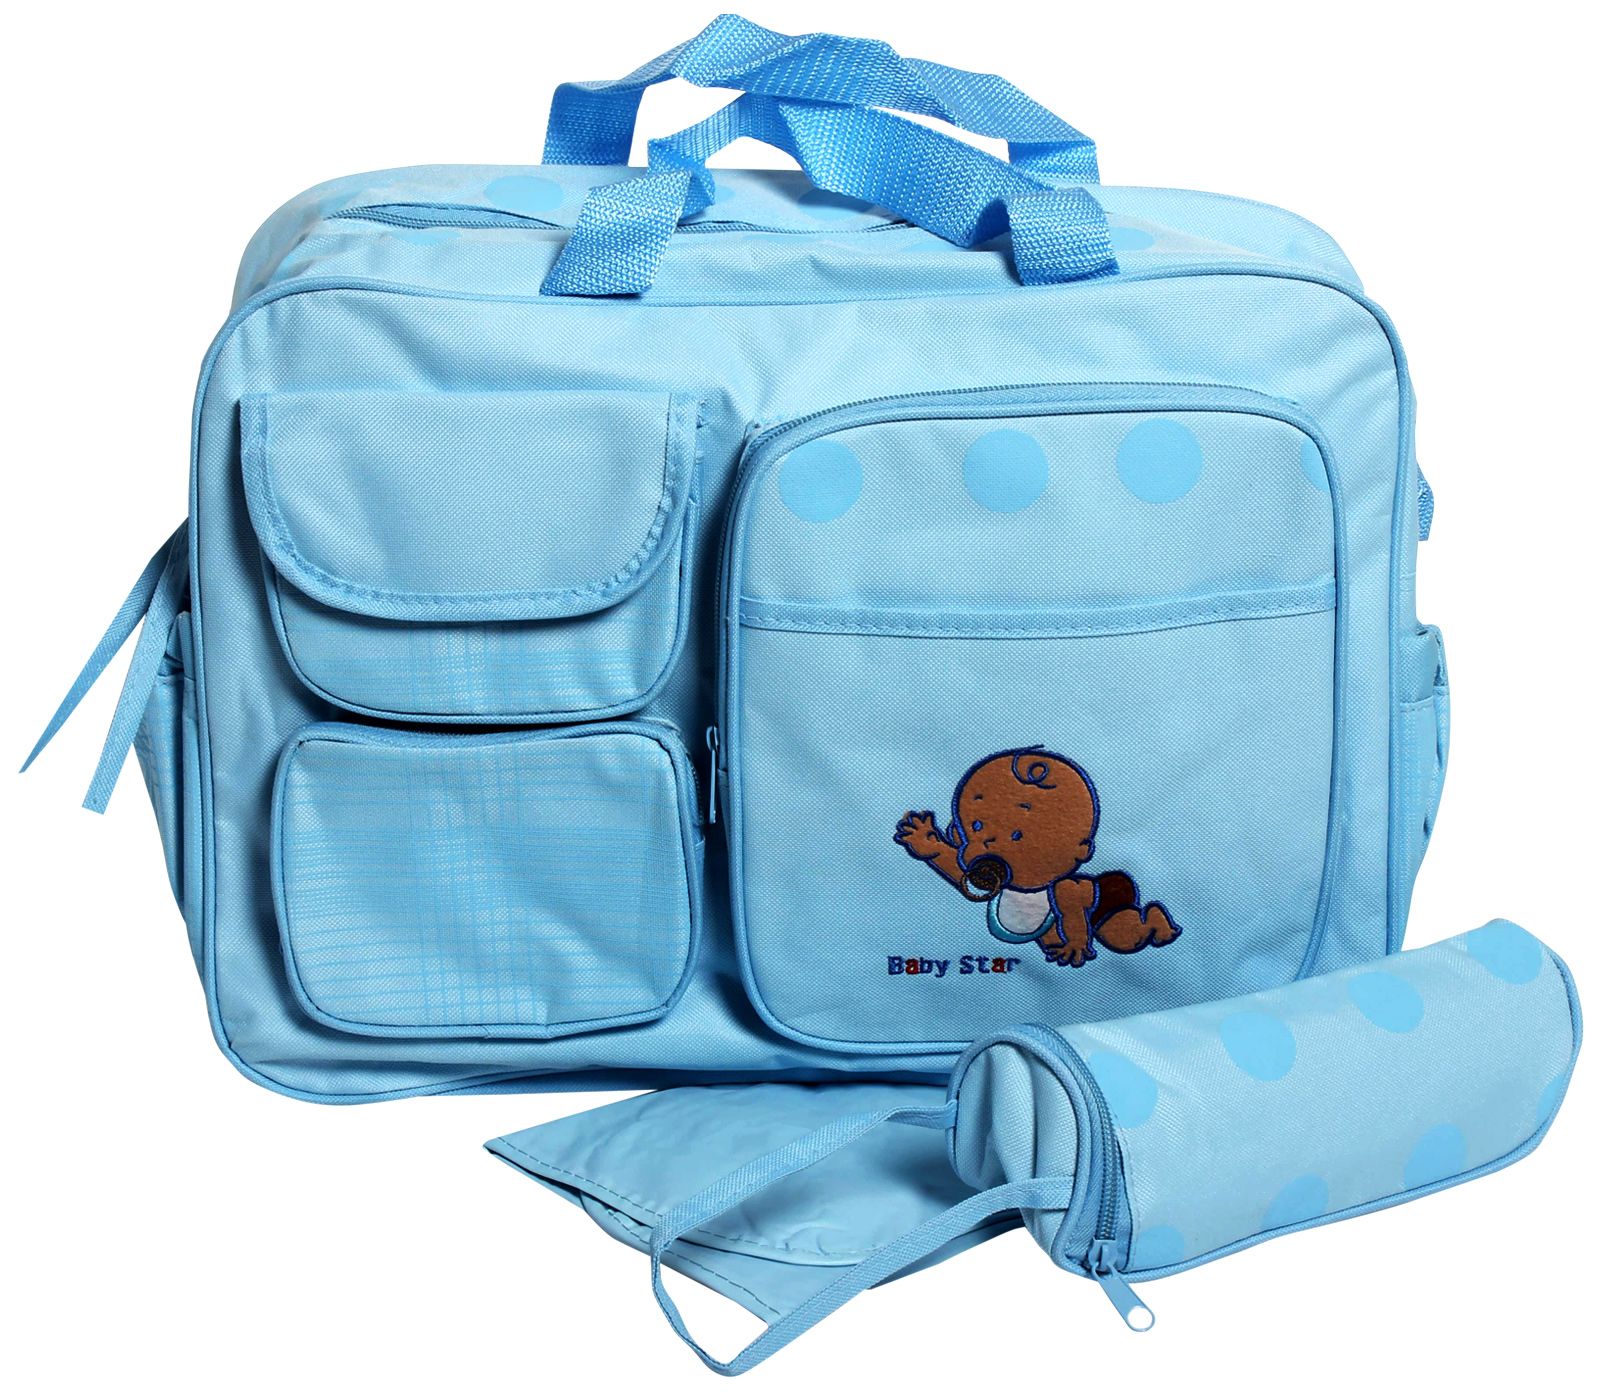 Baby Star Blue Bag